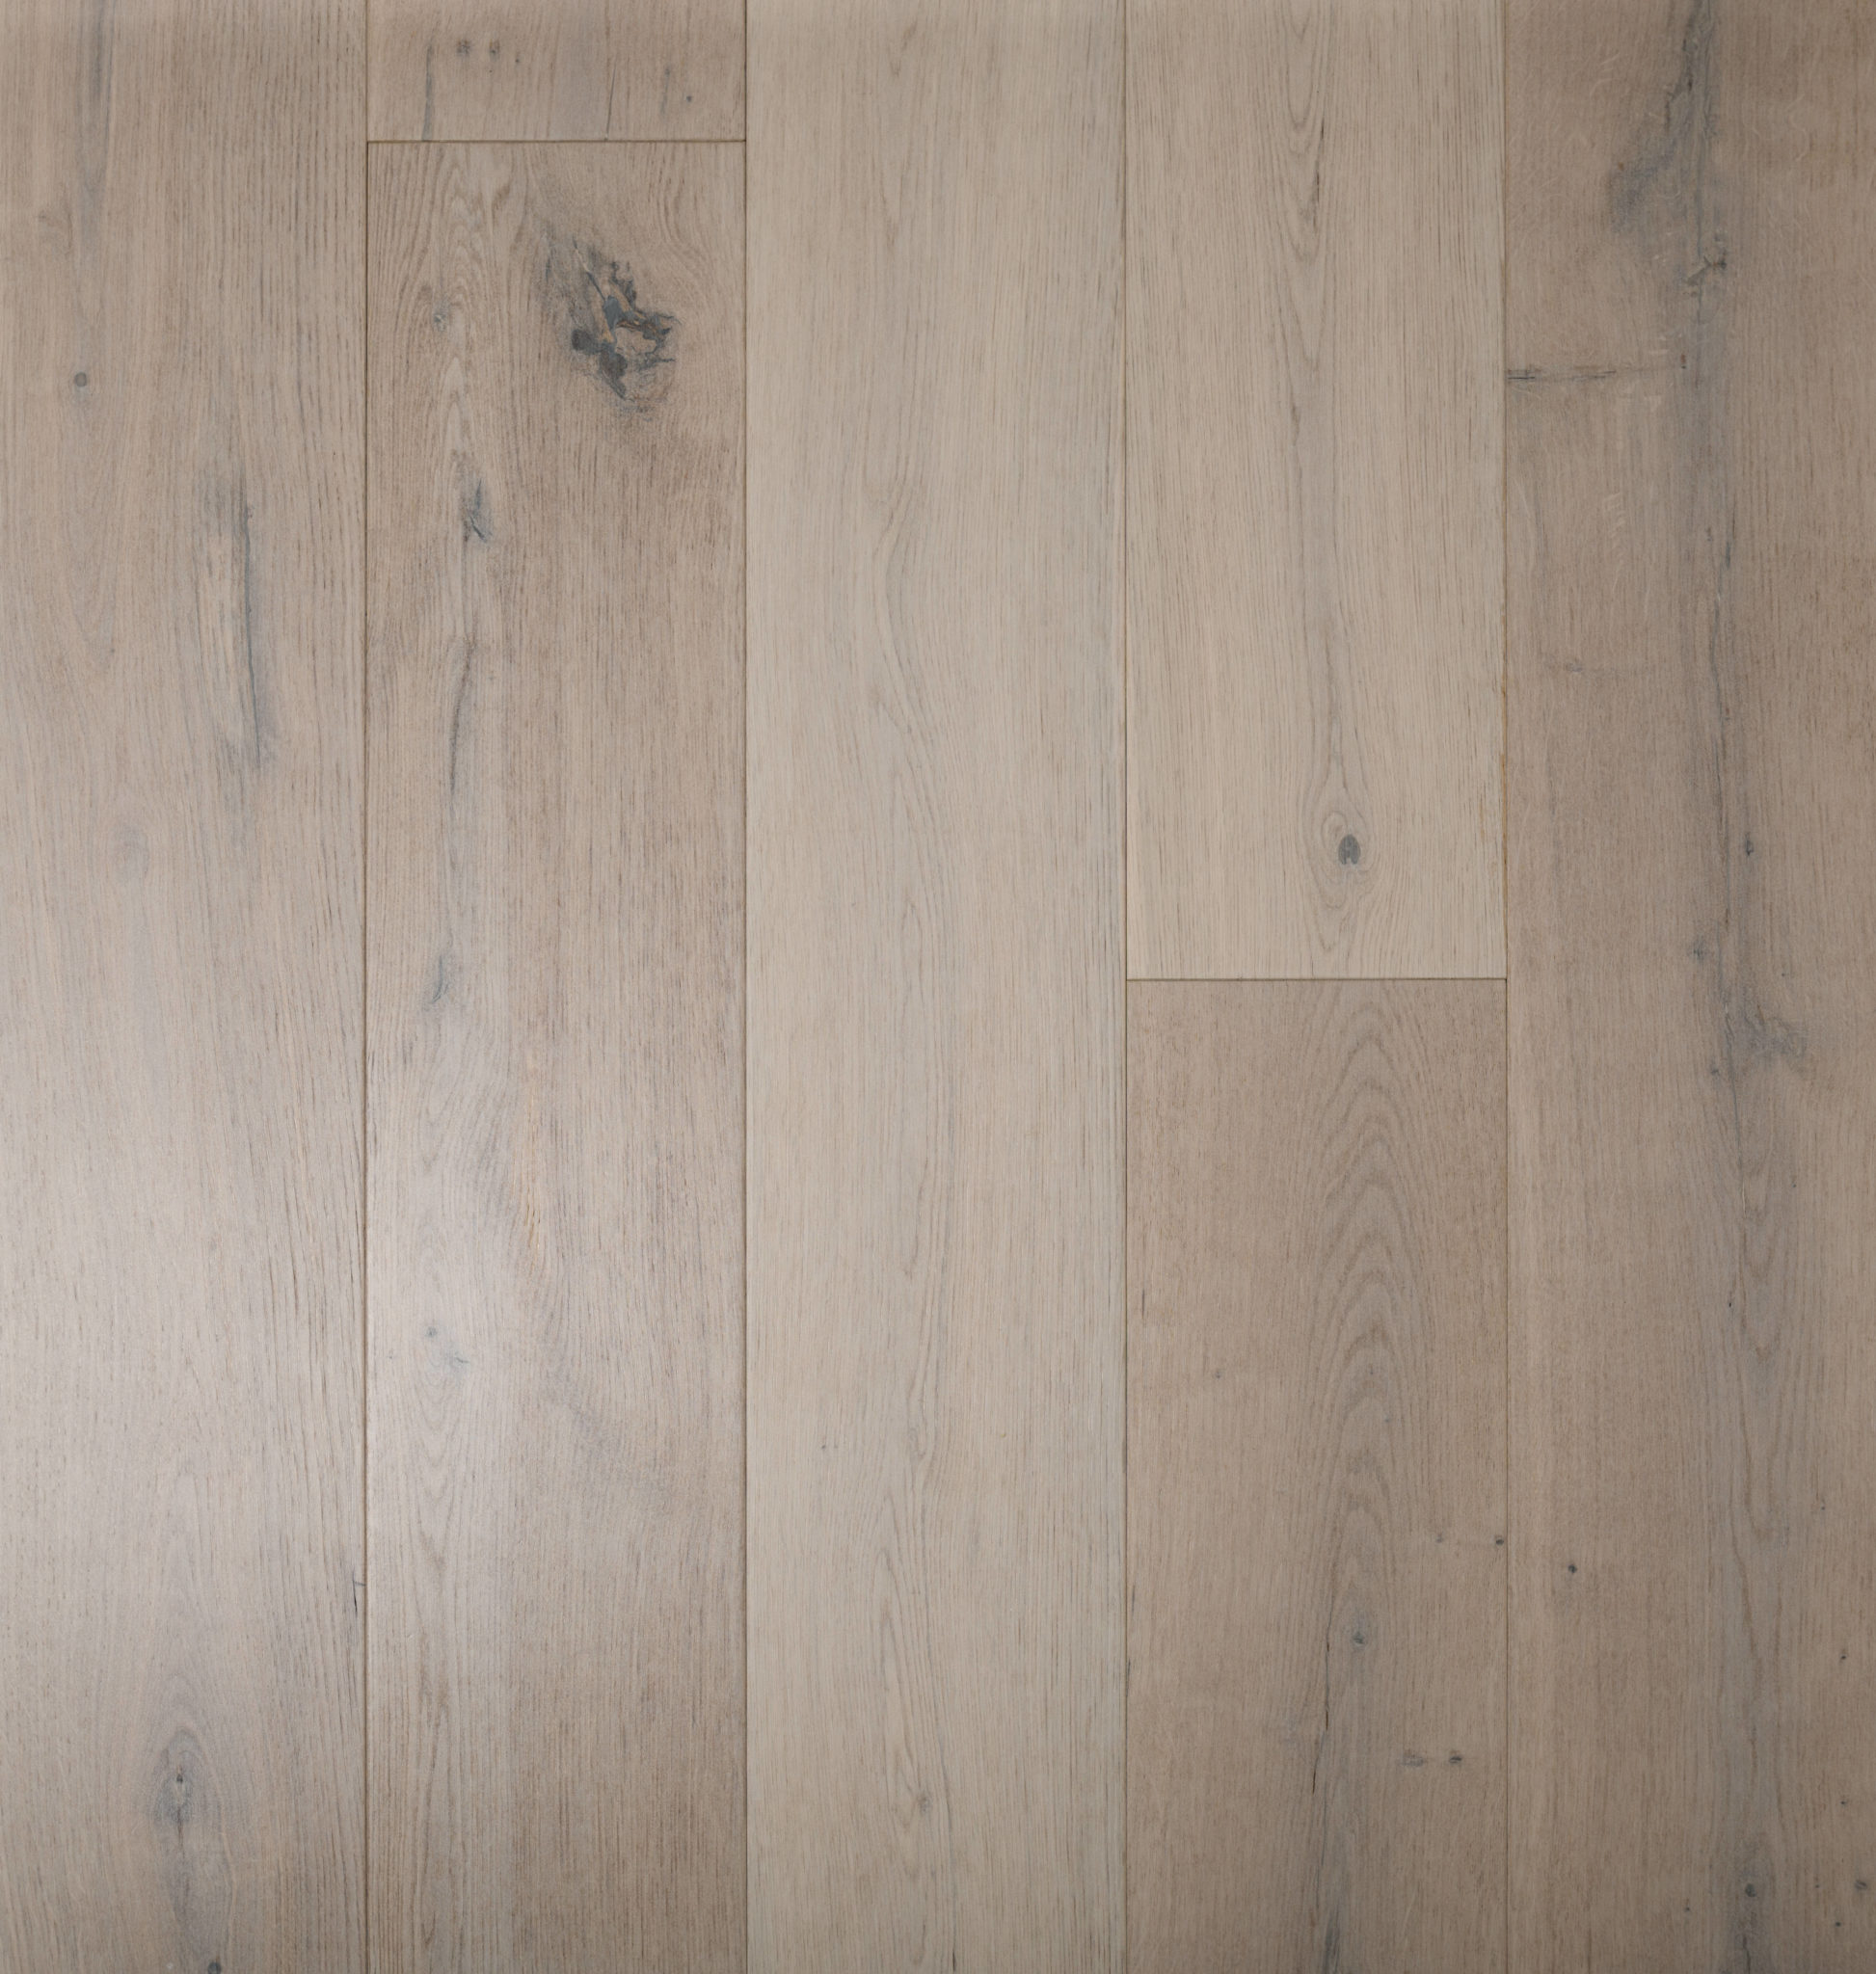 Karndean Polyflor Luvanto Cfs, Cfs Hardwood Flooring Reviews